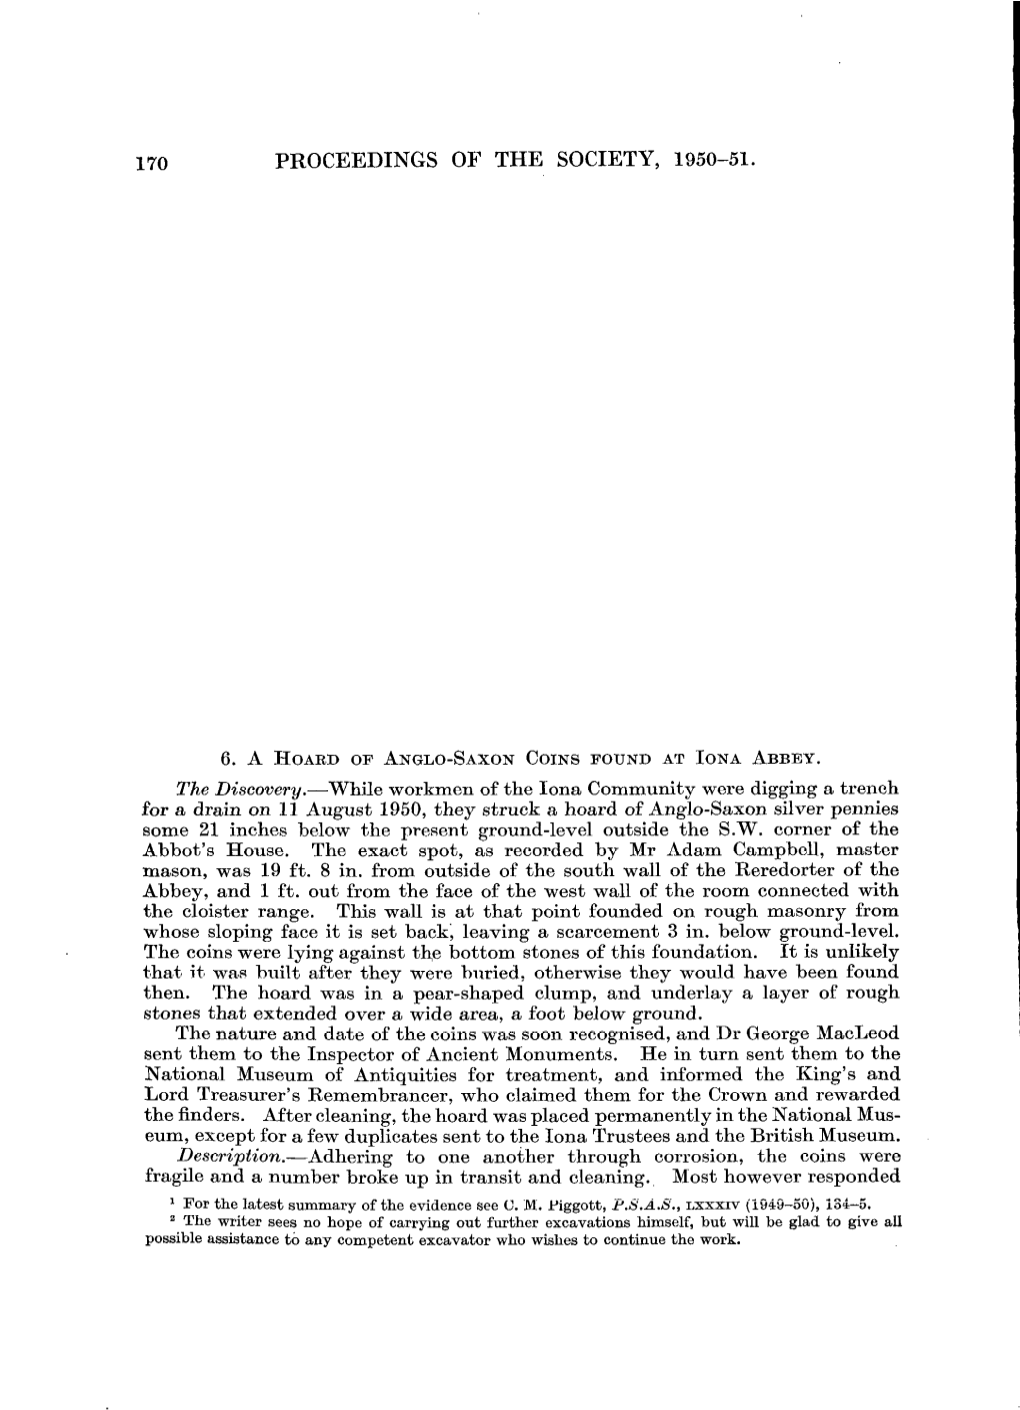 Proceedings of the Society, 195041